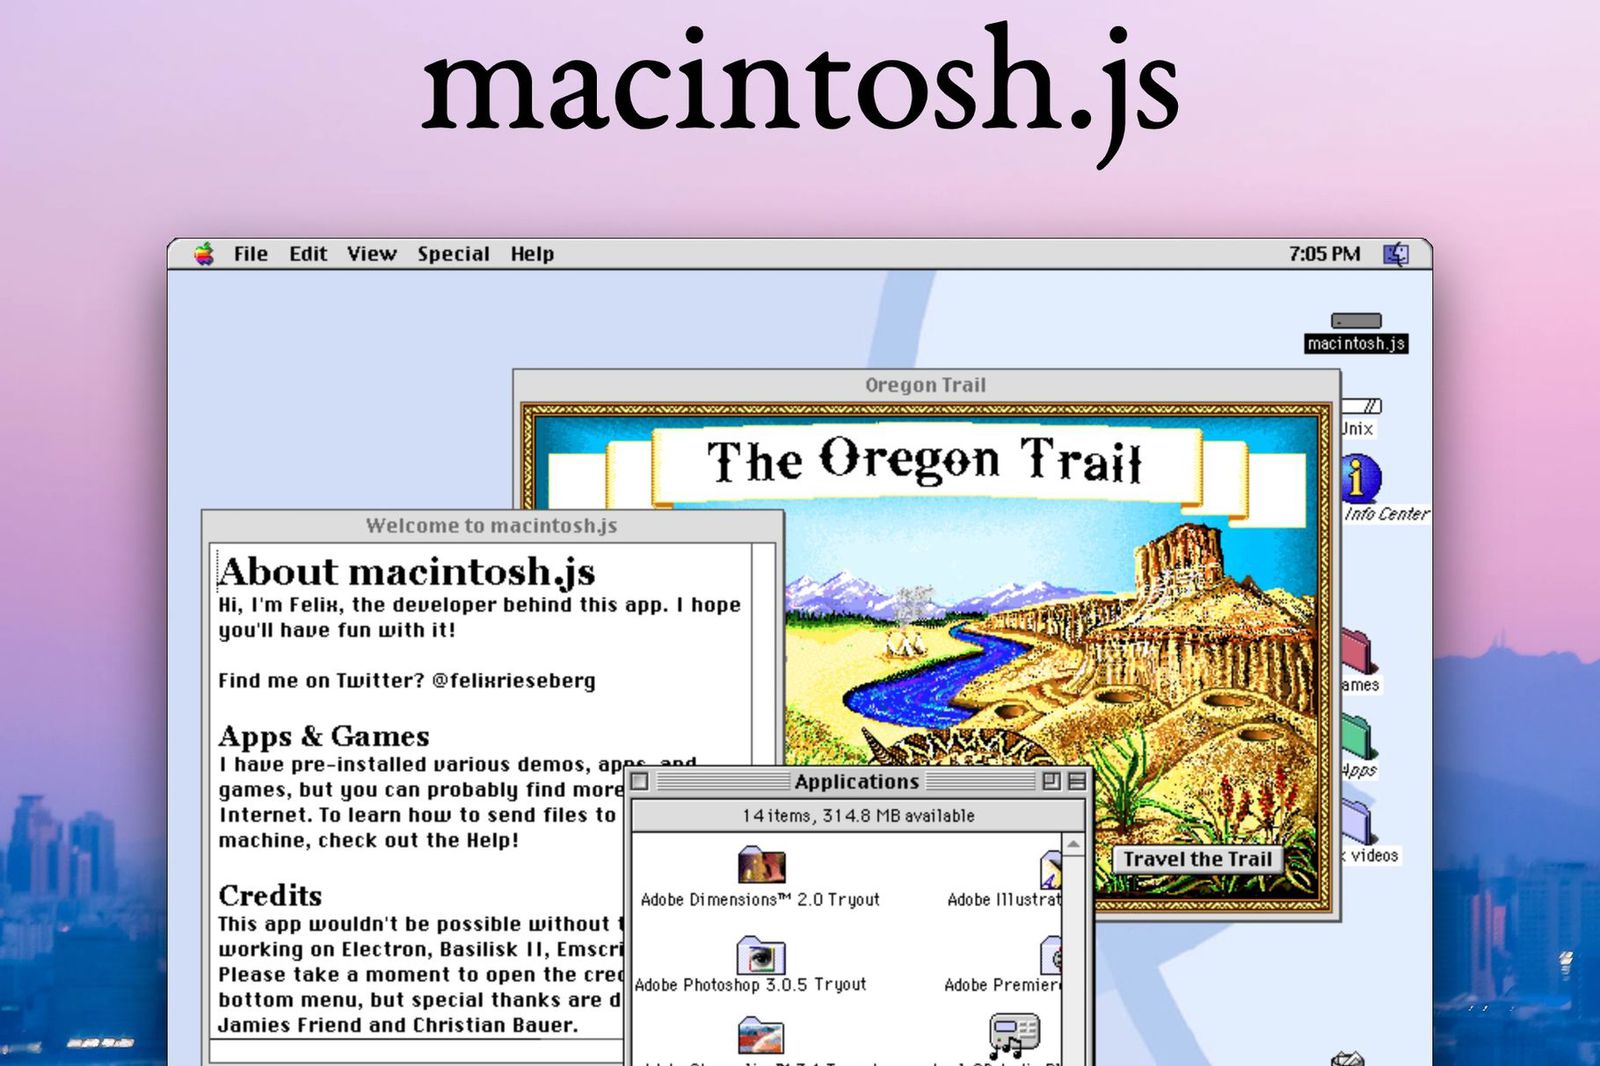 mac os 9 emulator on windows 7